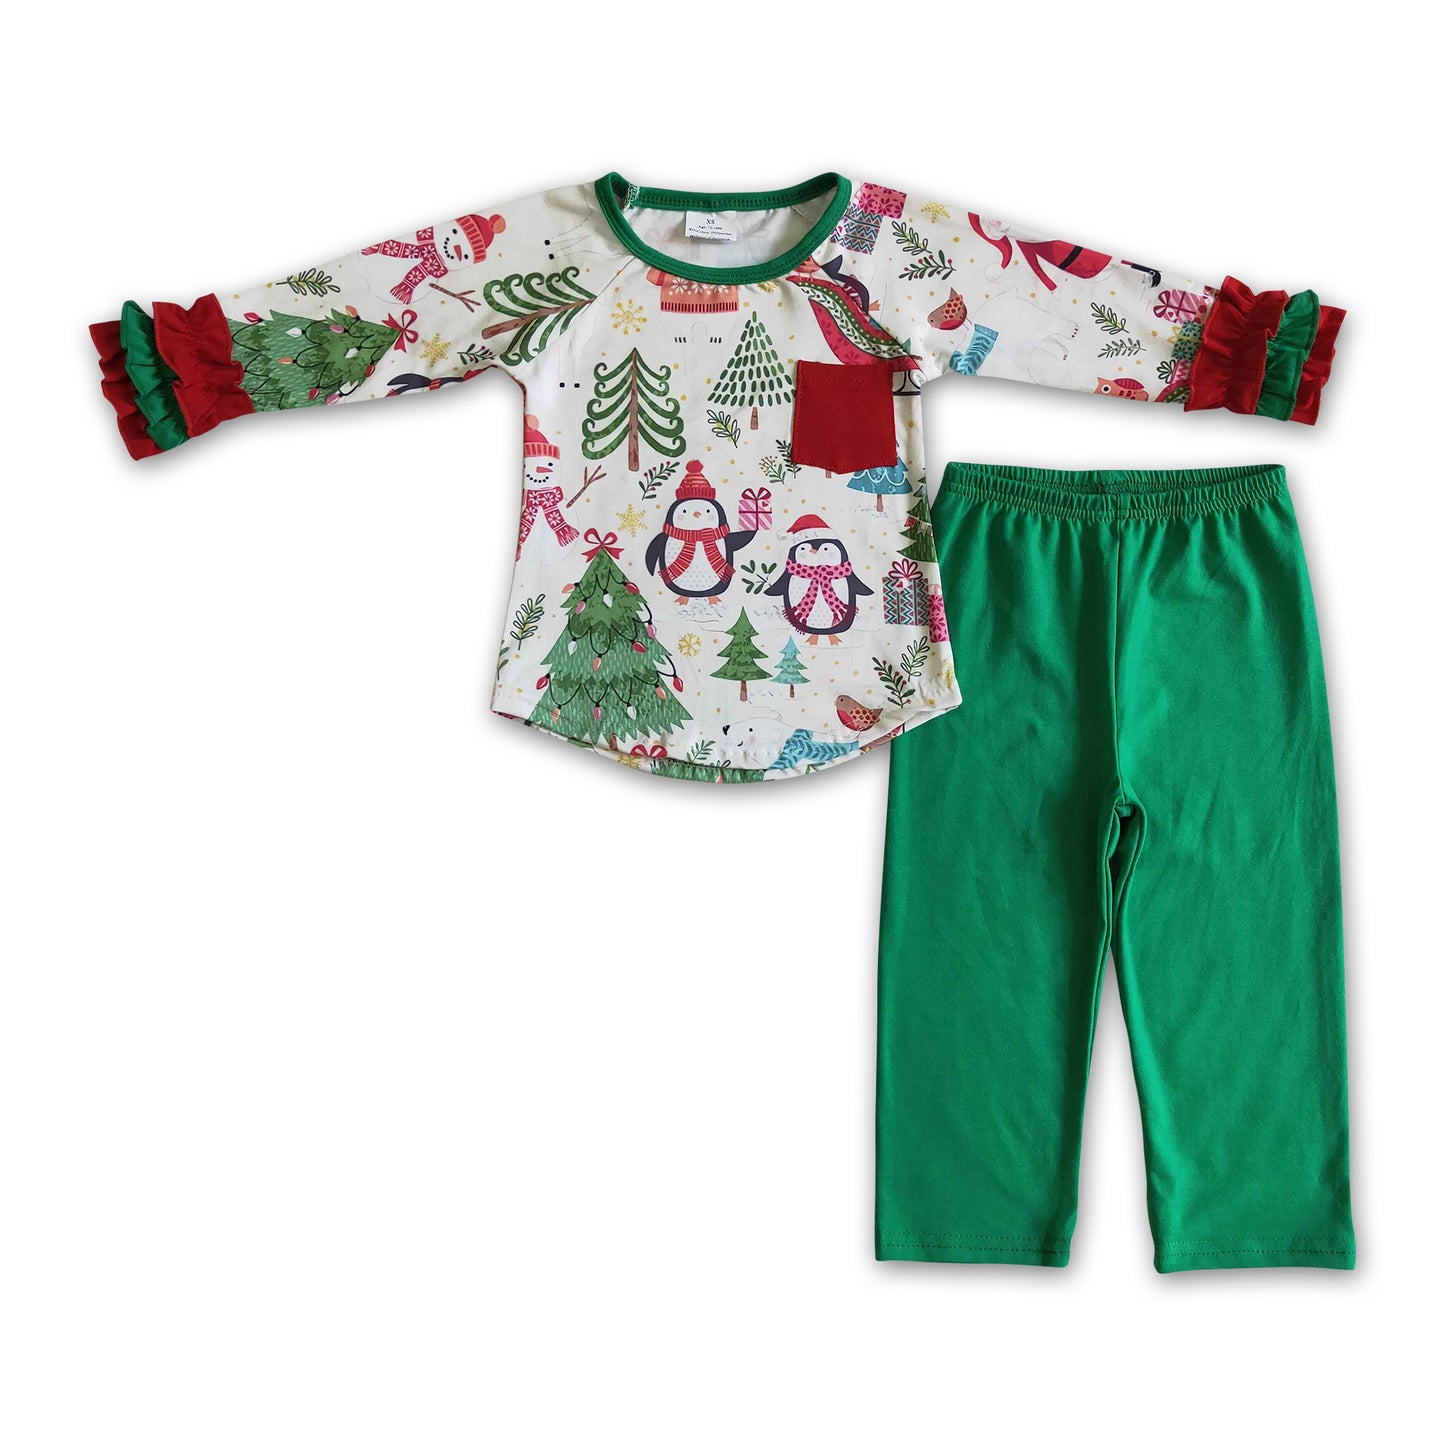 Christmas tree shirt green pants girls clothes